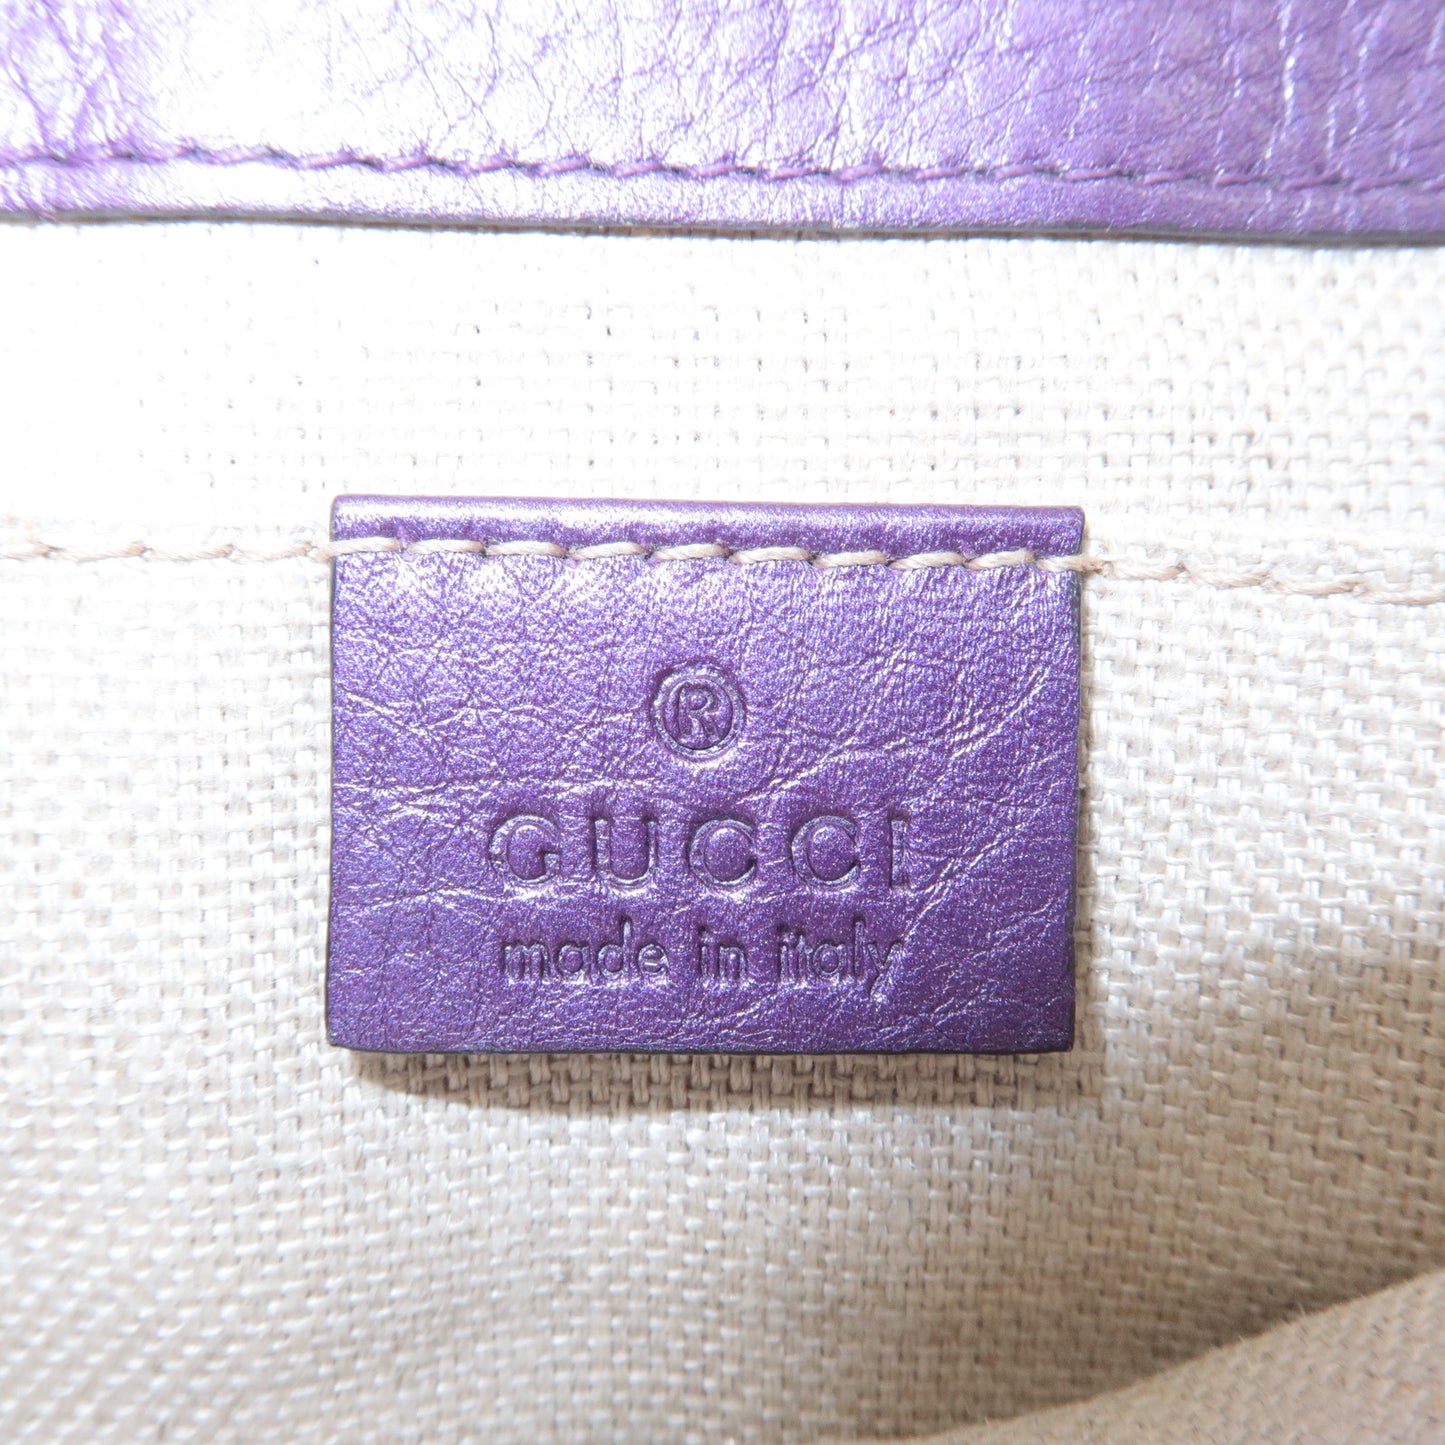 GUCCI Leather Chain Shoulder Bag Clutch Bag Purple 268748